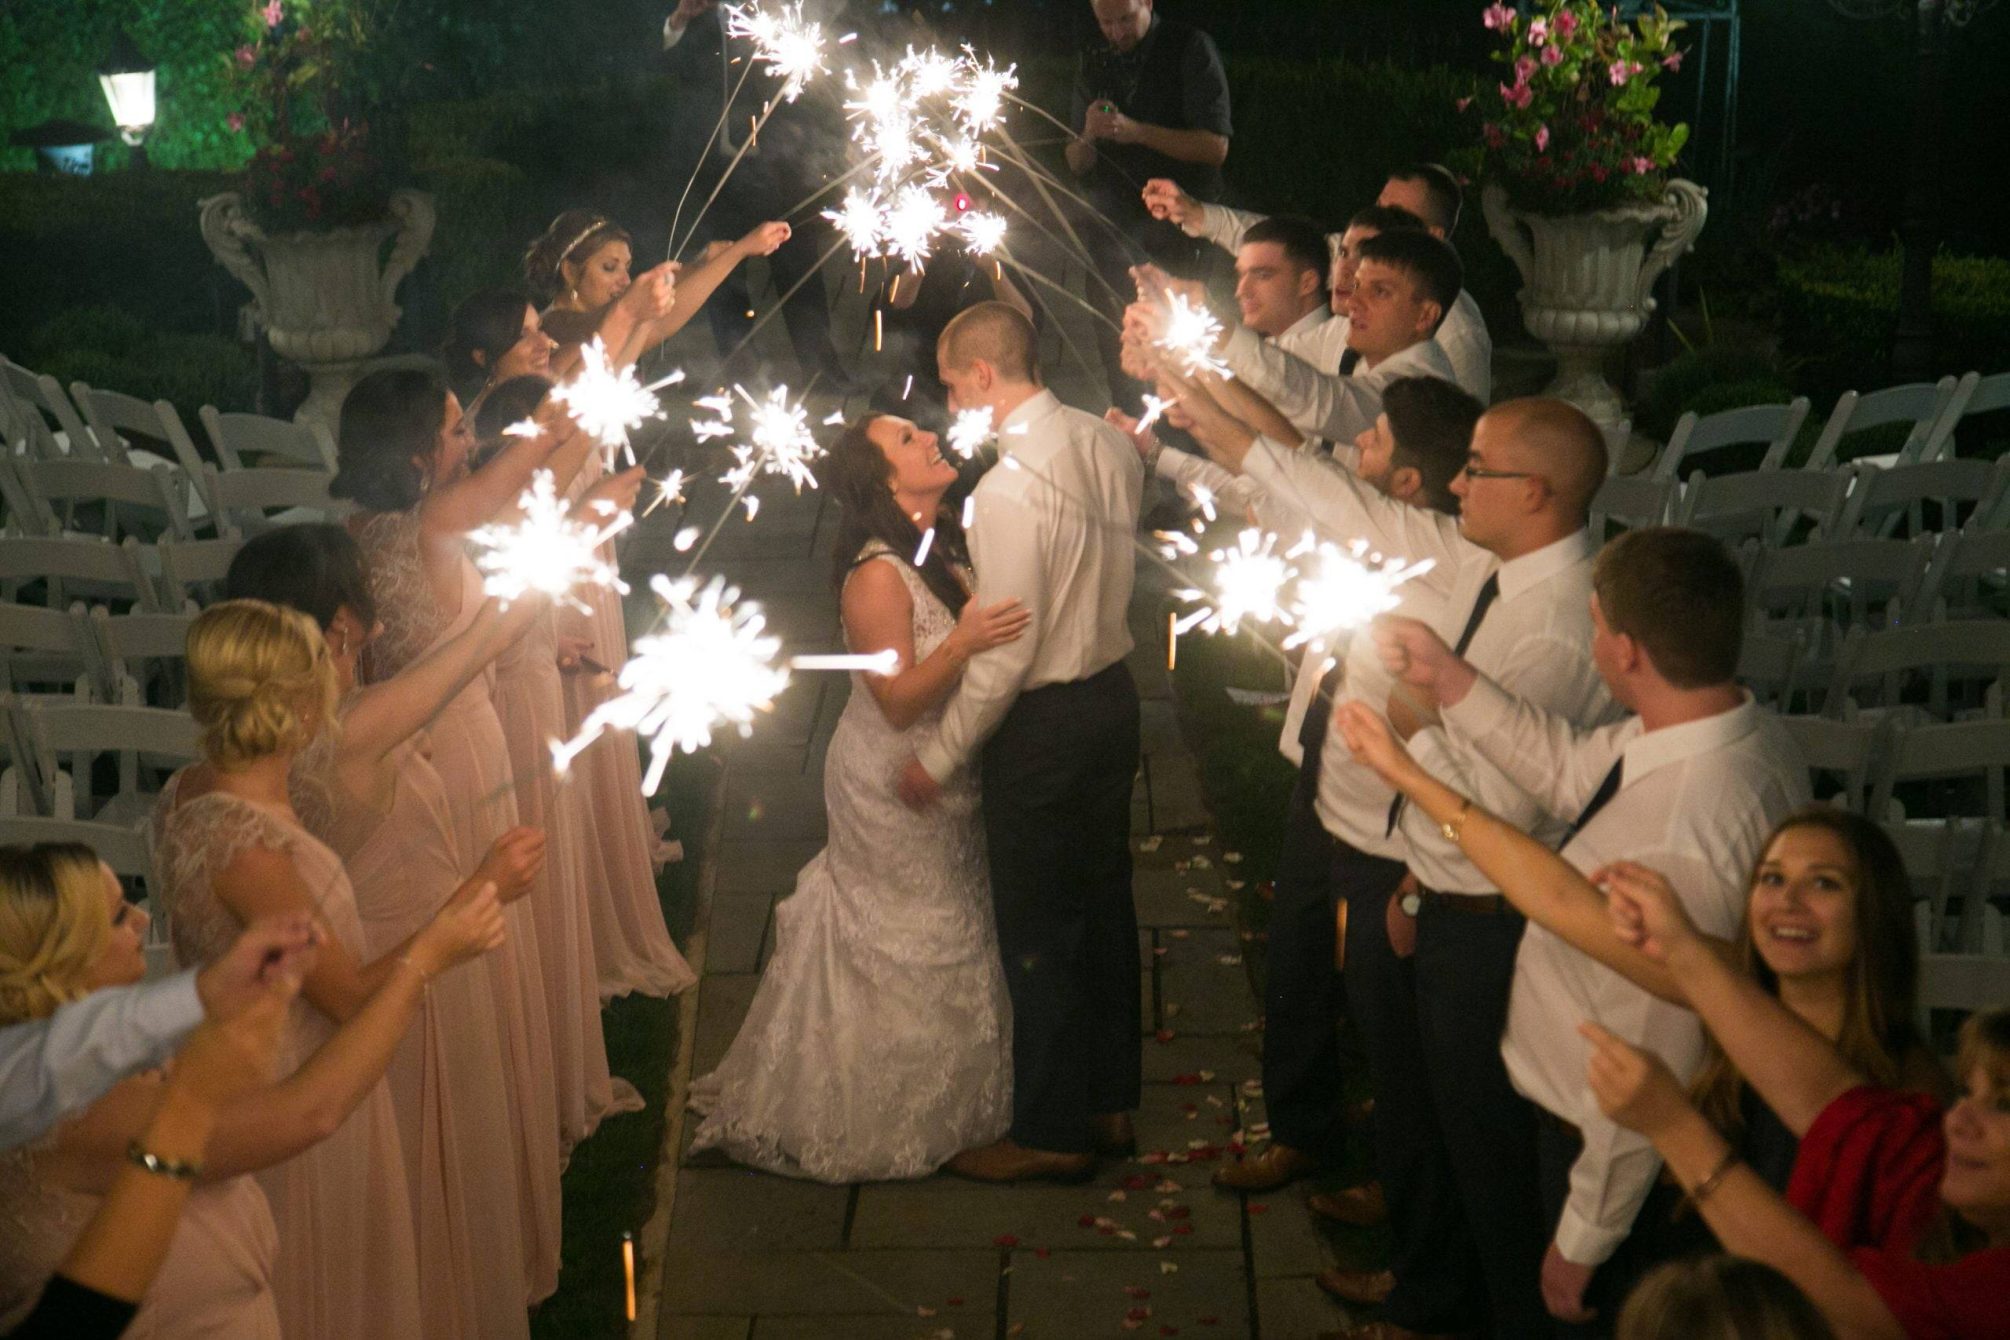 Park Savoy bride and groom kiss under sparklers